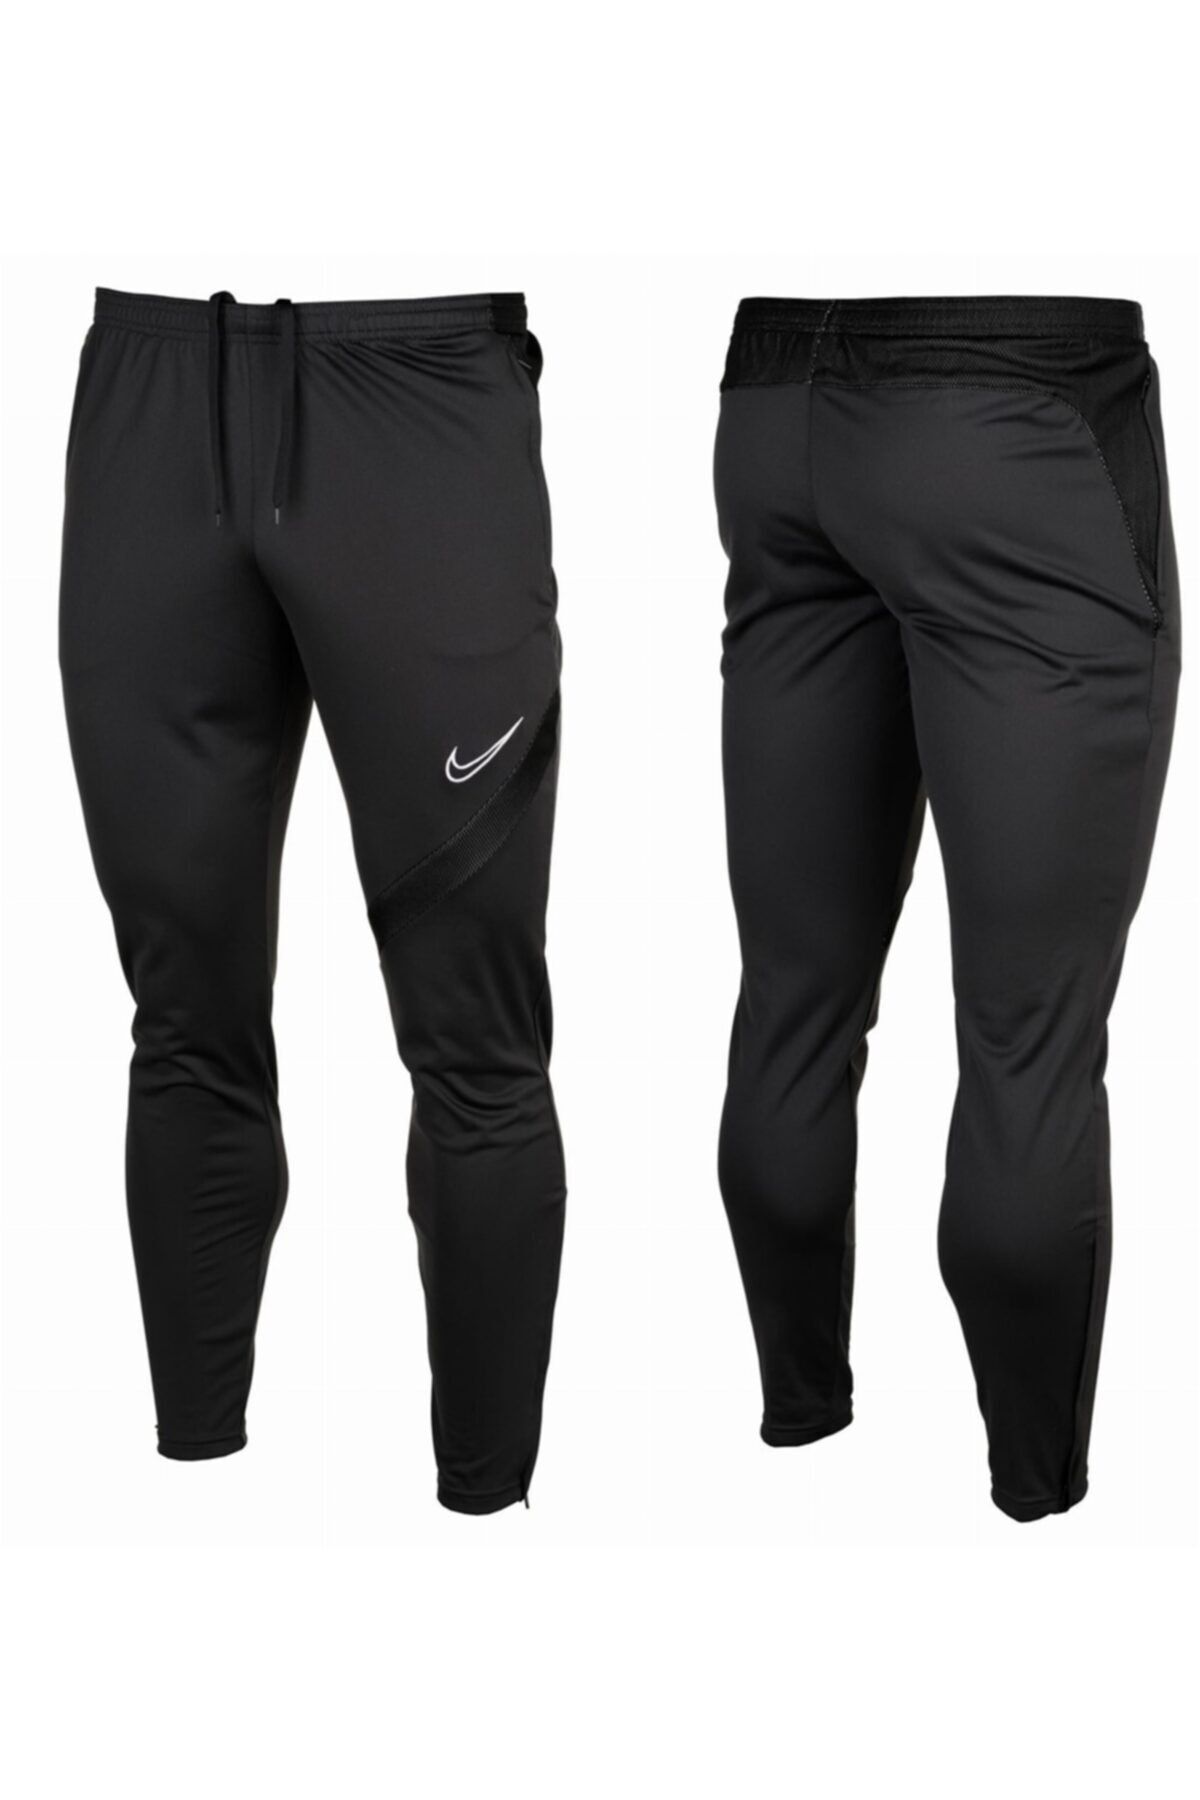 Nike M Nk Dry Acdpr Pant - Erkek Siyah Standart Fit Eşofman Alt - Bv6920-061